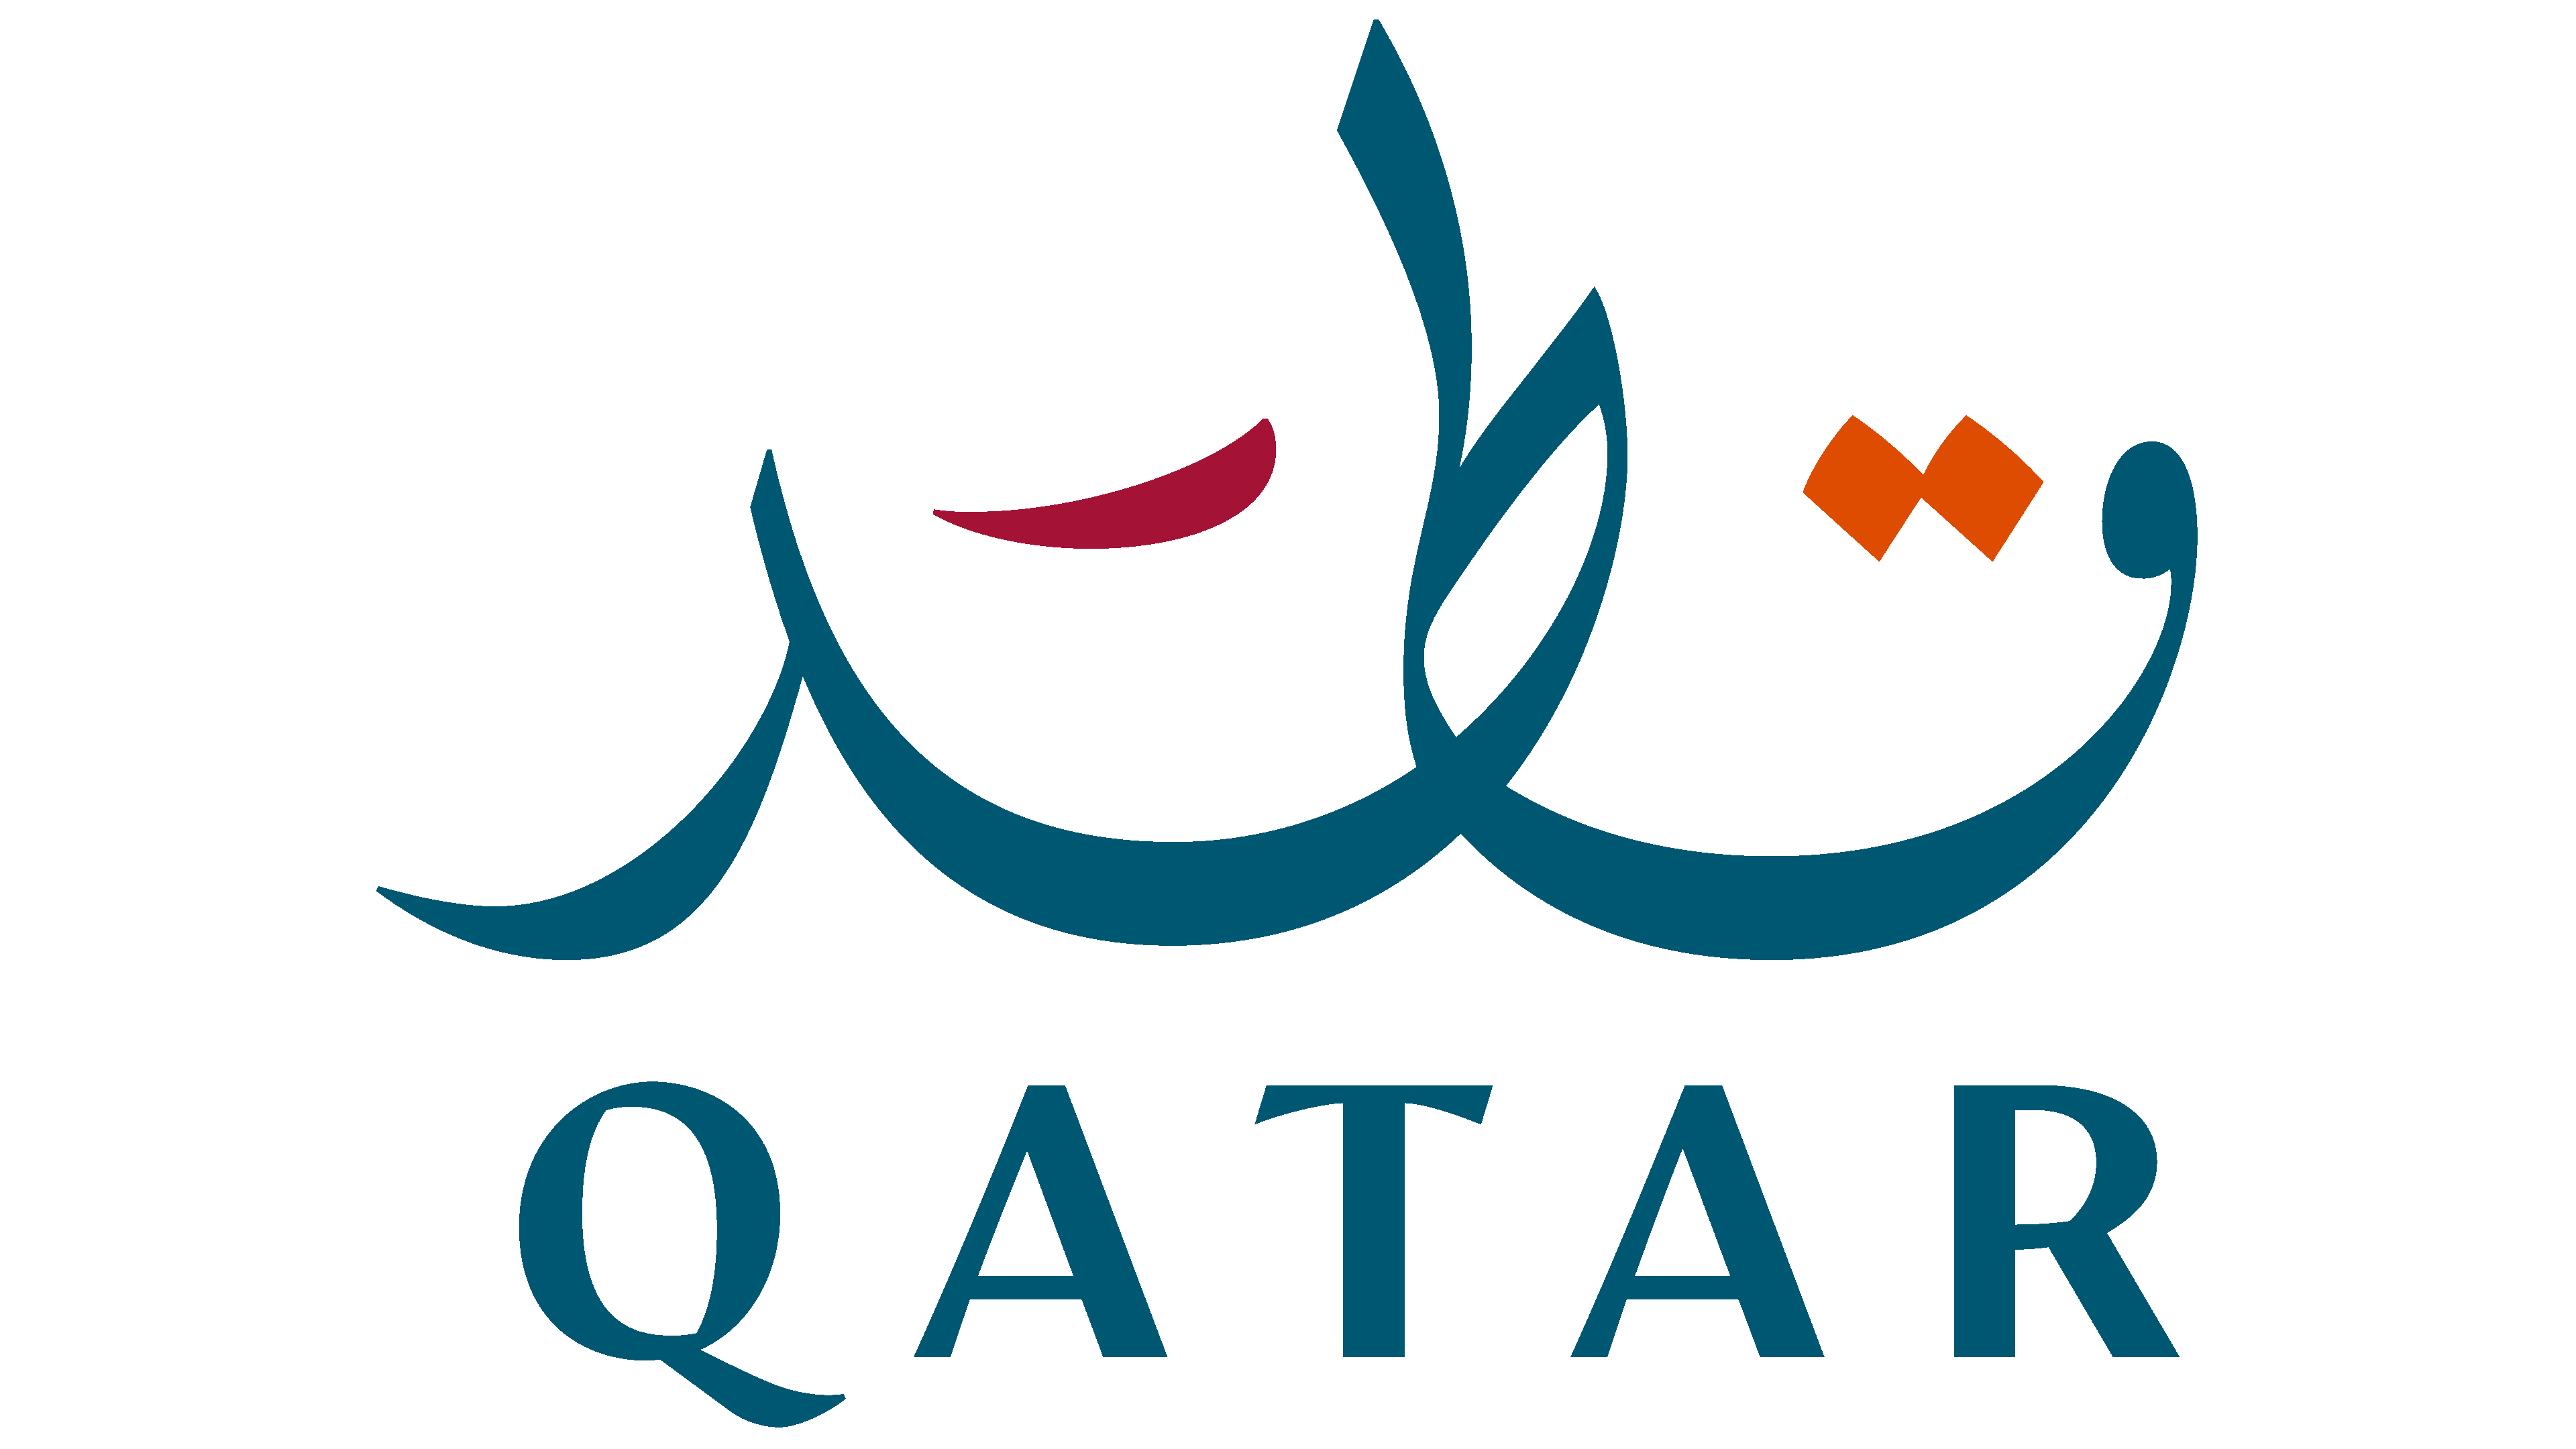 Afc asian cup qatar 2023 symbol design logo Vector Image